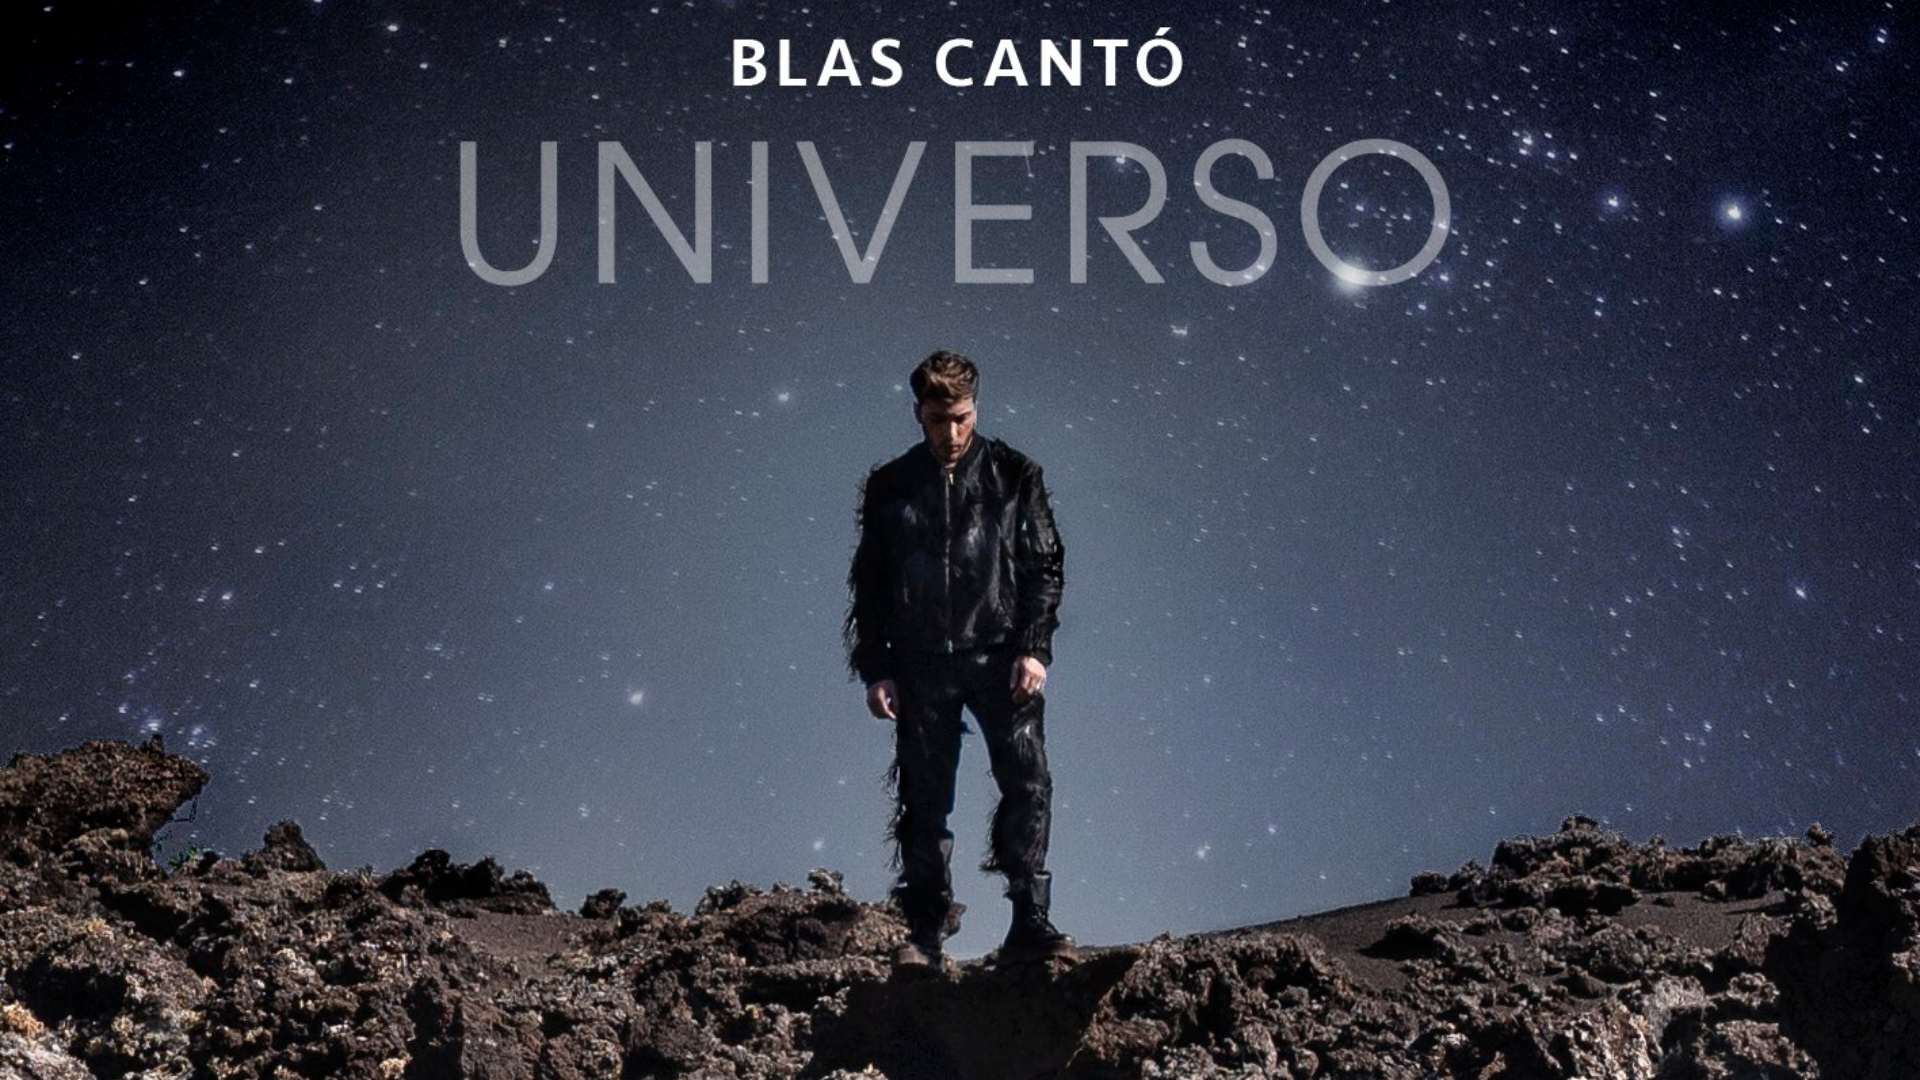 Eurovisión 2020: se presenta 'Universo' interpretado por Blas Cantó